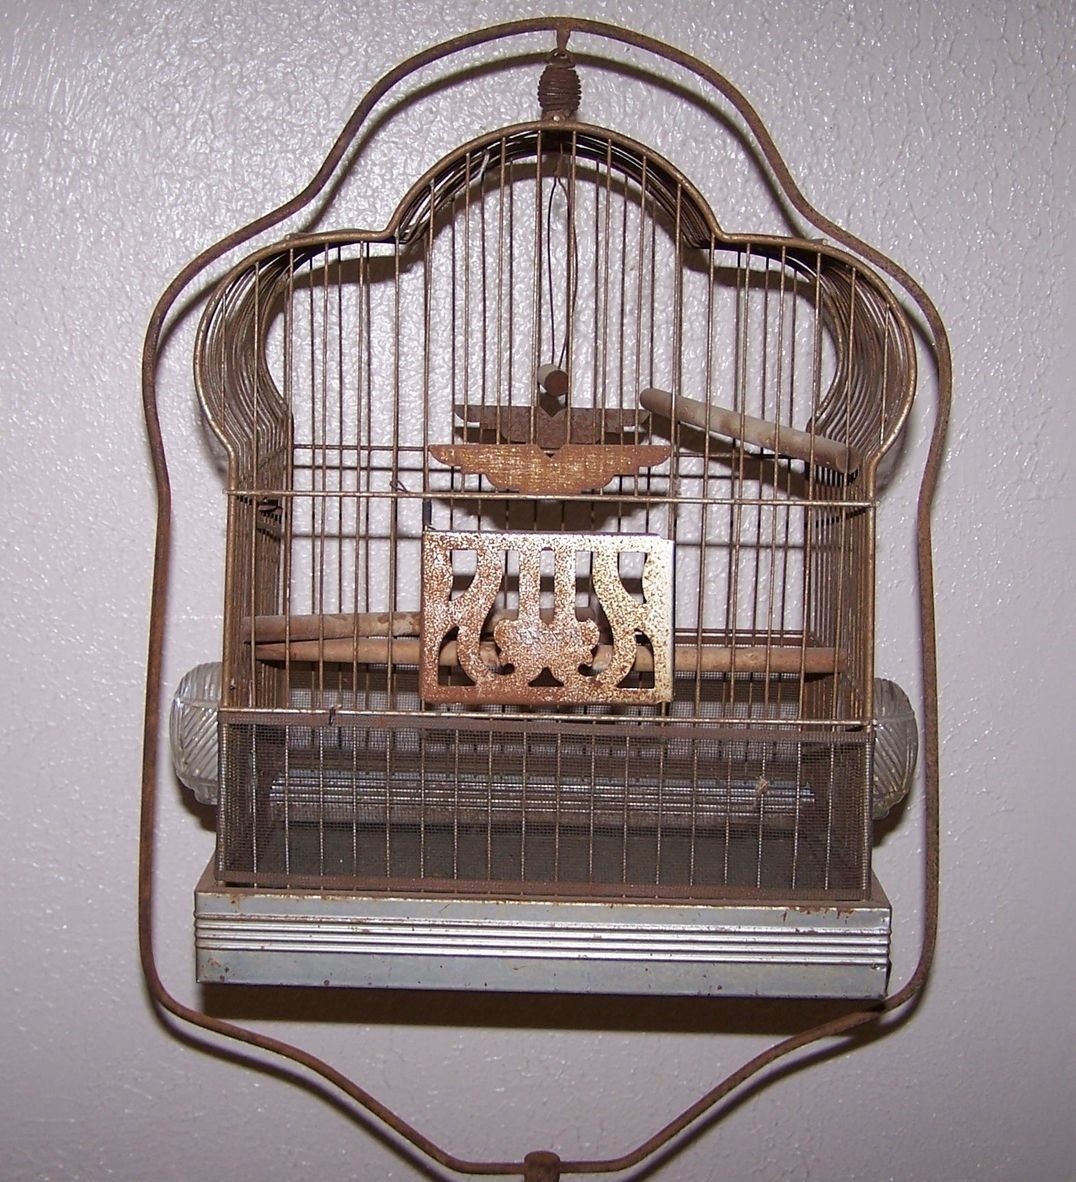 Vintage hendryx bird cage w stand bird houses feeders